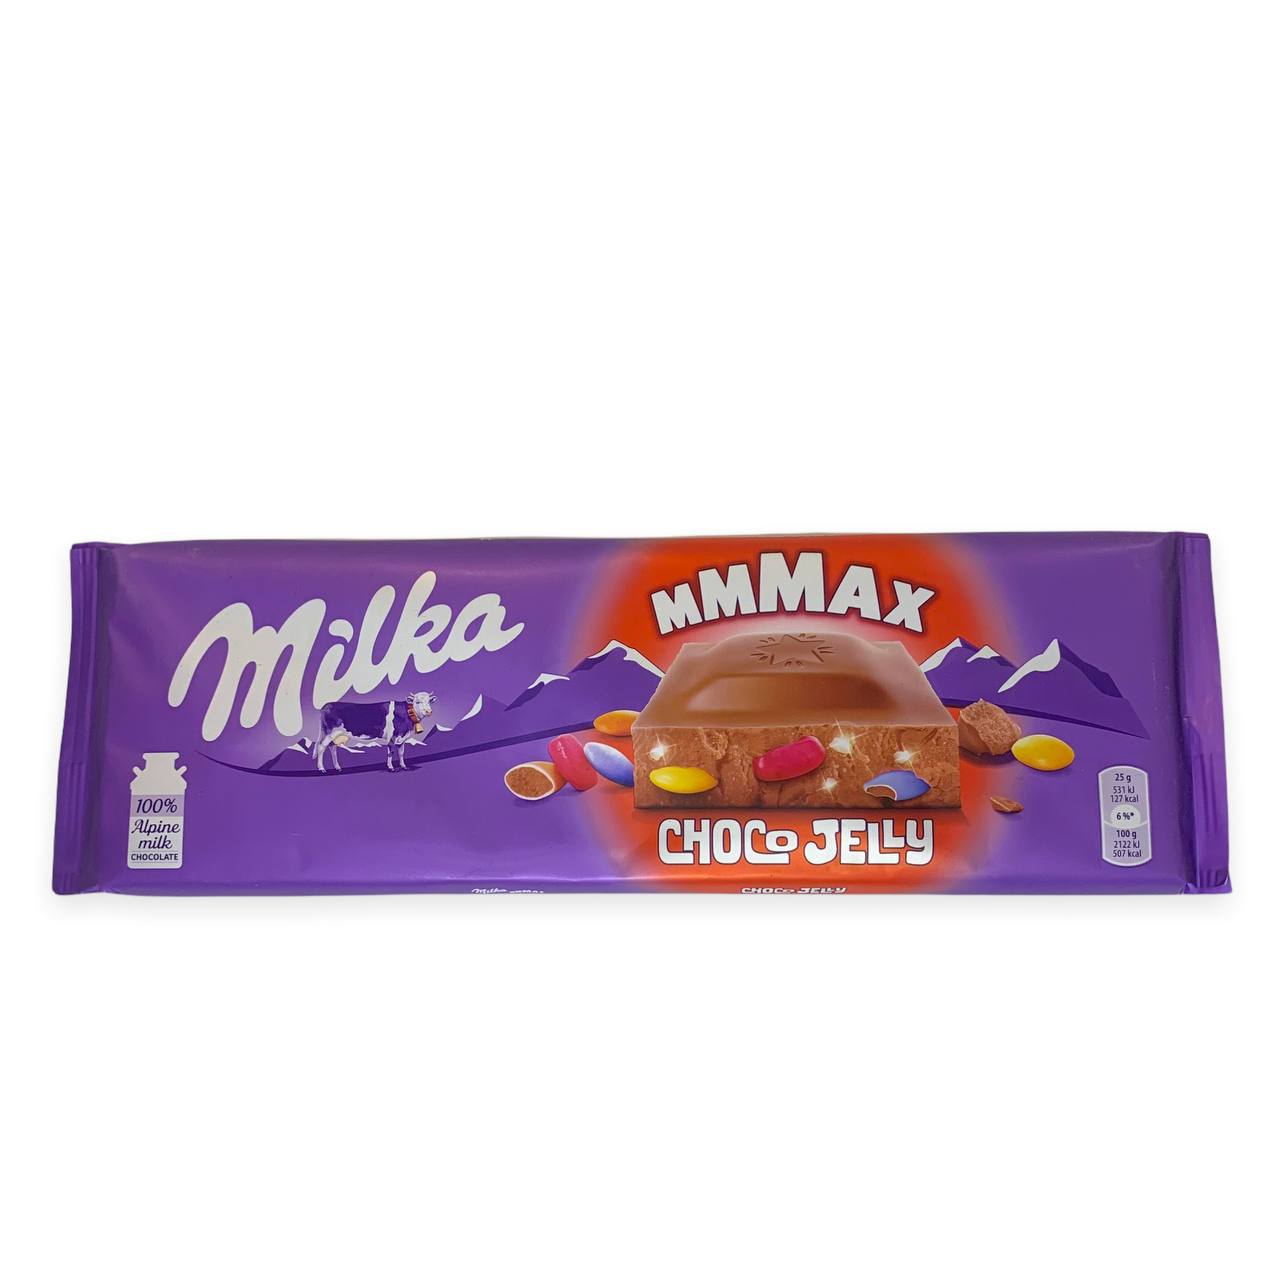 Milka jelly. Milka Choco Jelly. Milka Choco Jelly 300гр. Milka Max. Milka MMMAX шоколад молочный Choco Jelly 250г фл/п штрих код.